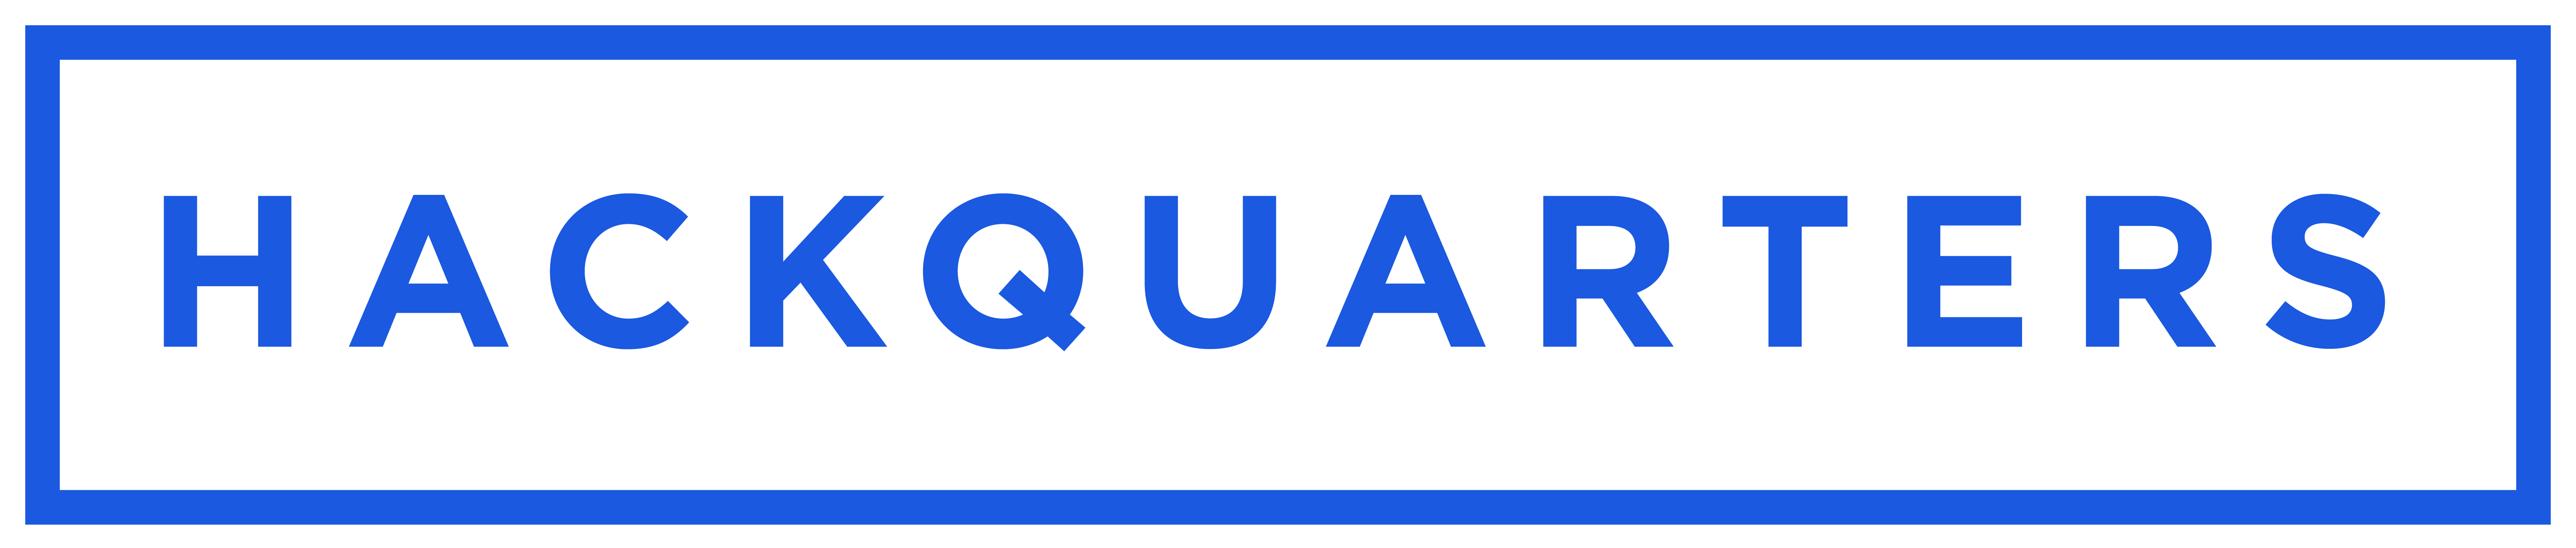 hackquarters-blue-logo-1-1.png